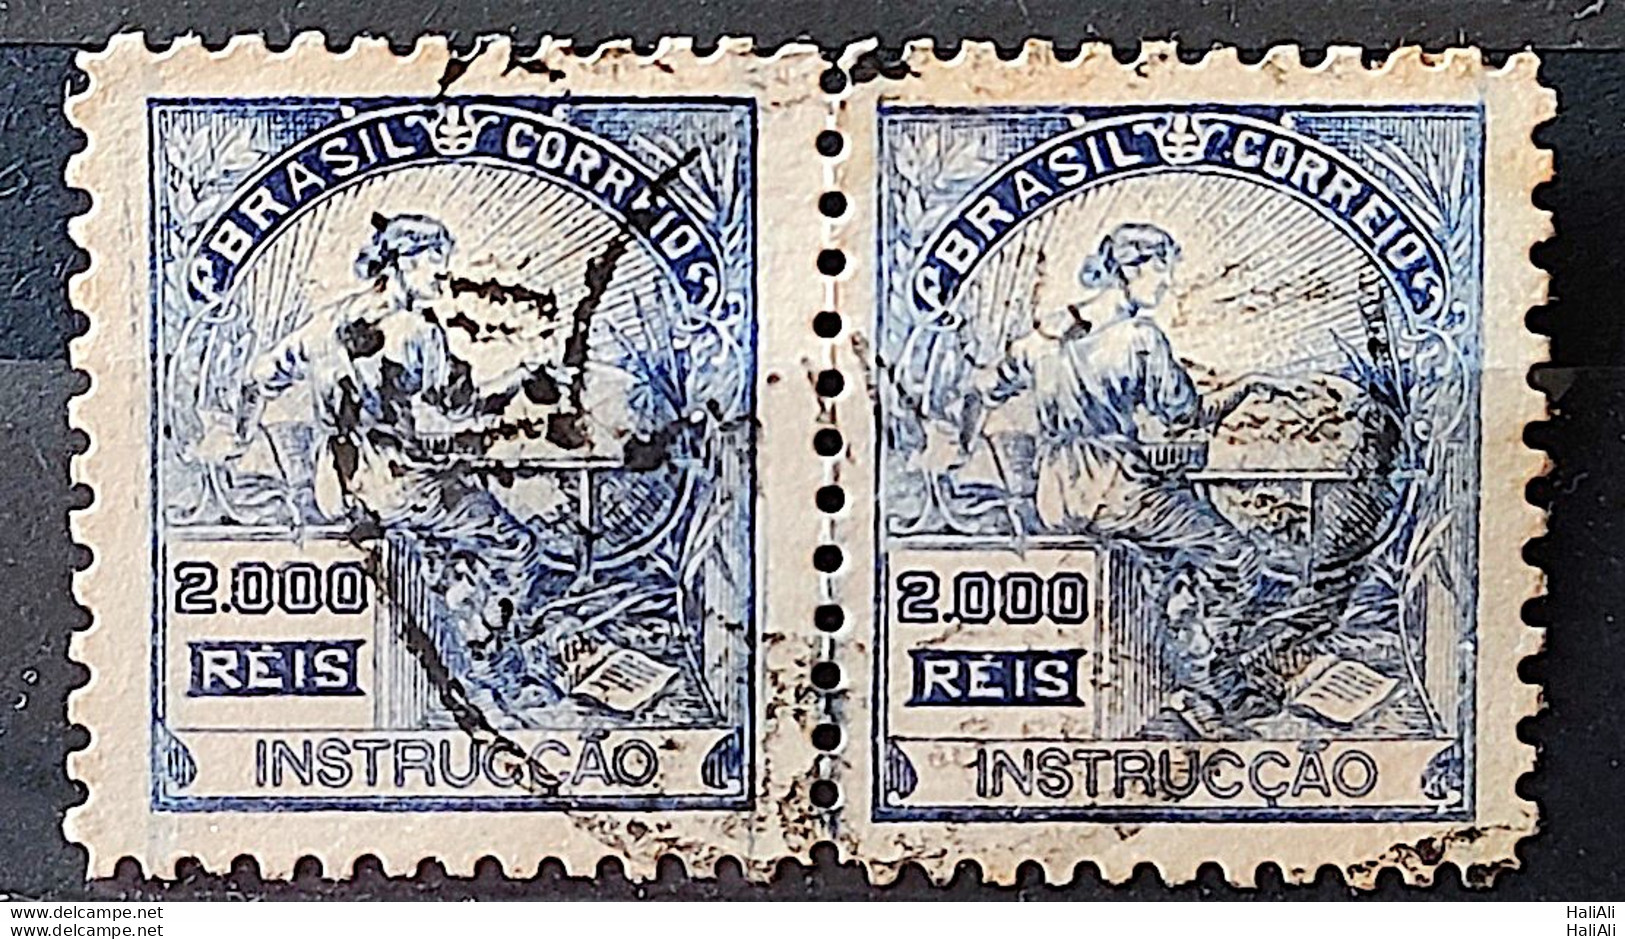 Brazil Regular Stamp Cod RHM 294 Grandpa Instruction 2000 Reis Filigree L 1934 Par Circulated - Oblitérés